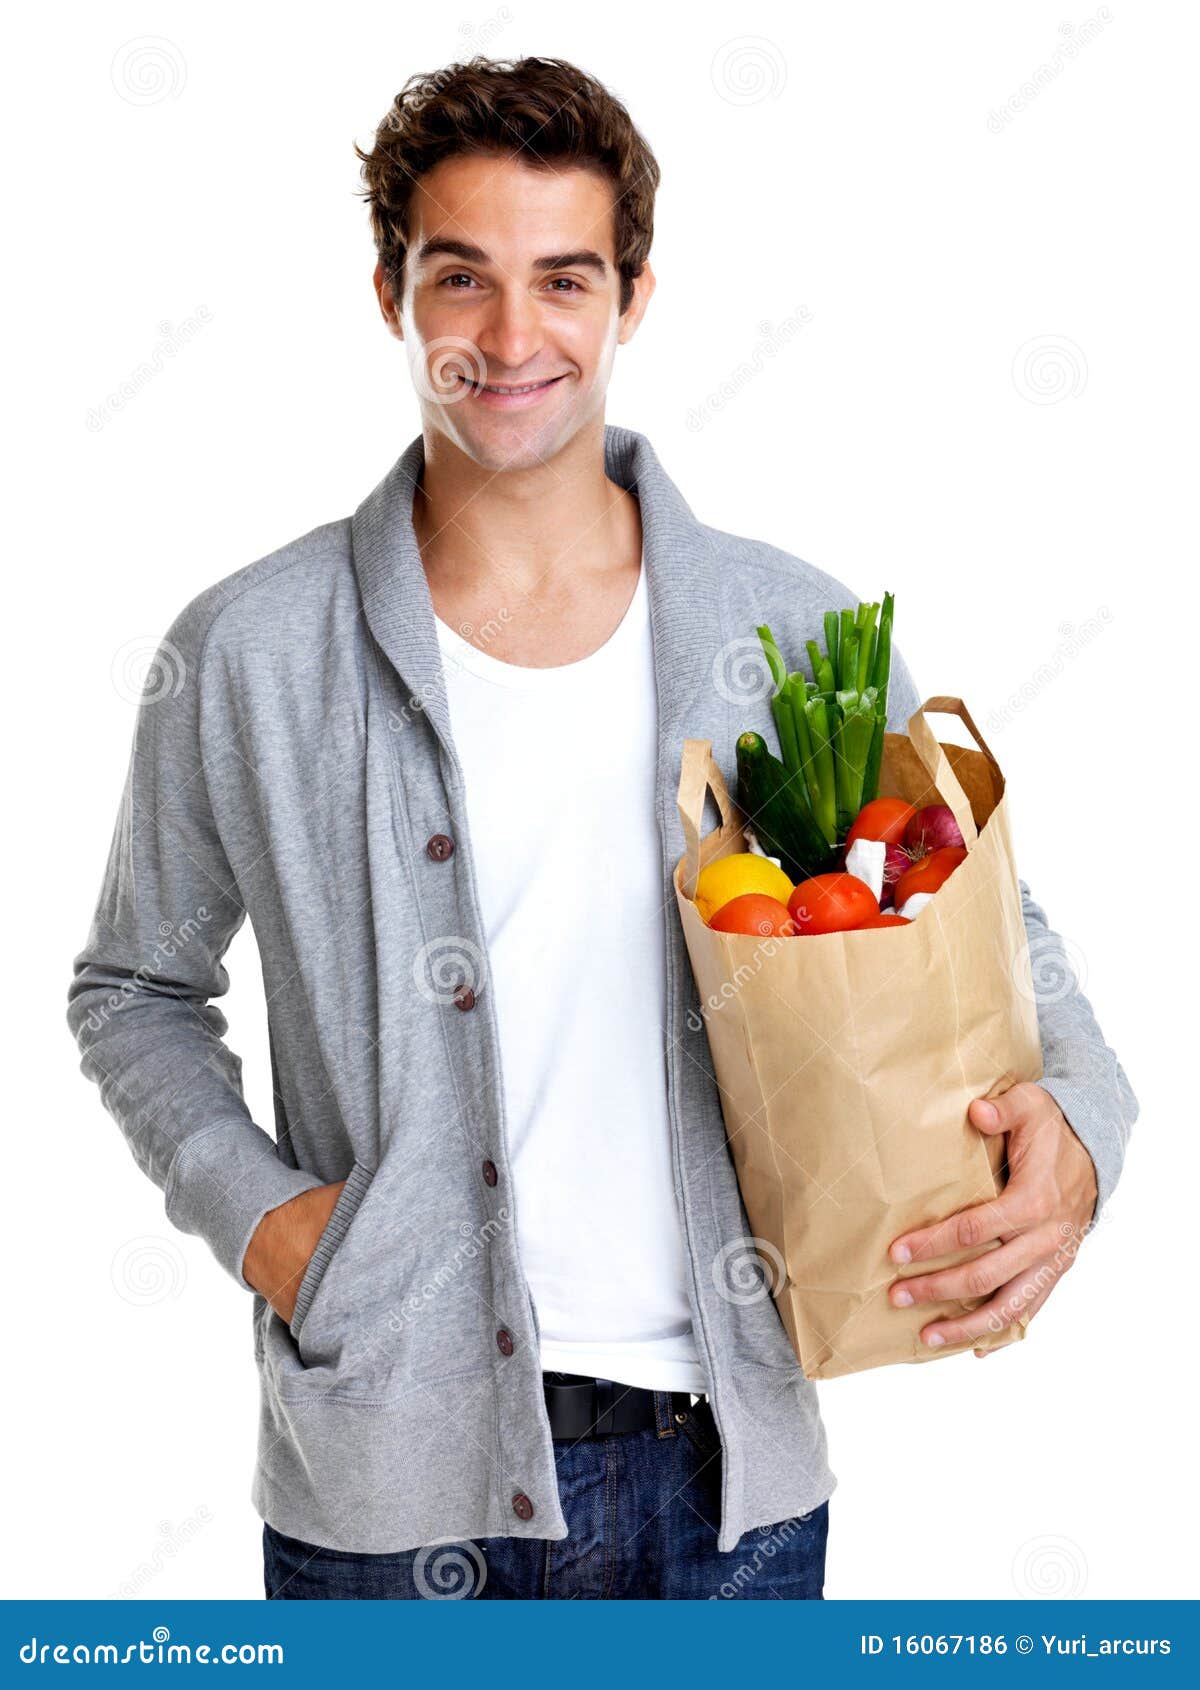 Мужчина семьянин. Человек с продуктами. Мужчина на белом фоне. Мужчина с пакетами. Мужчина с пакетами продуктов.